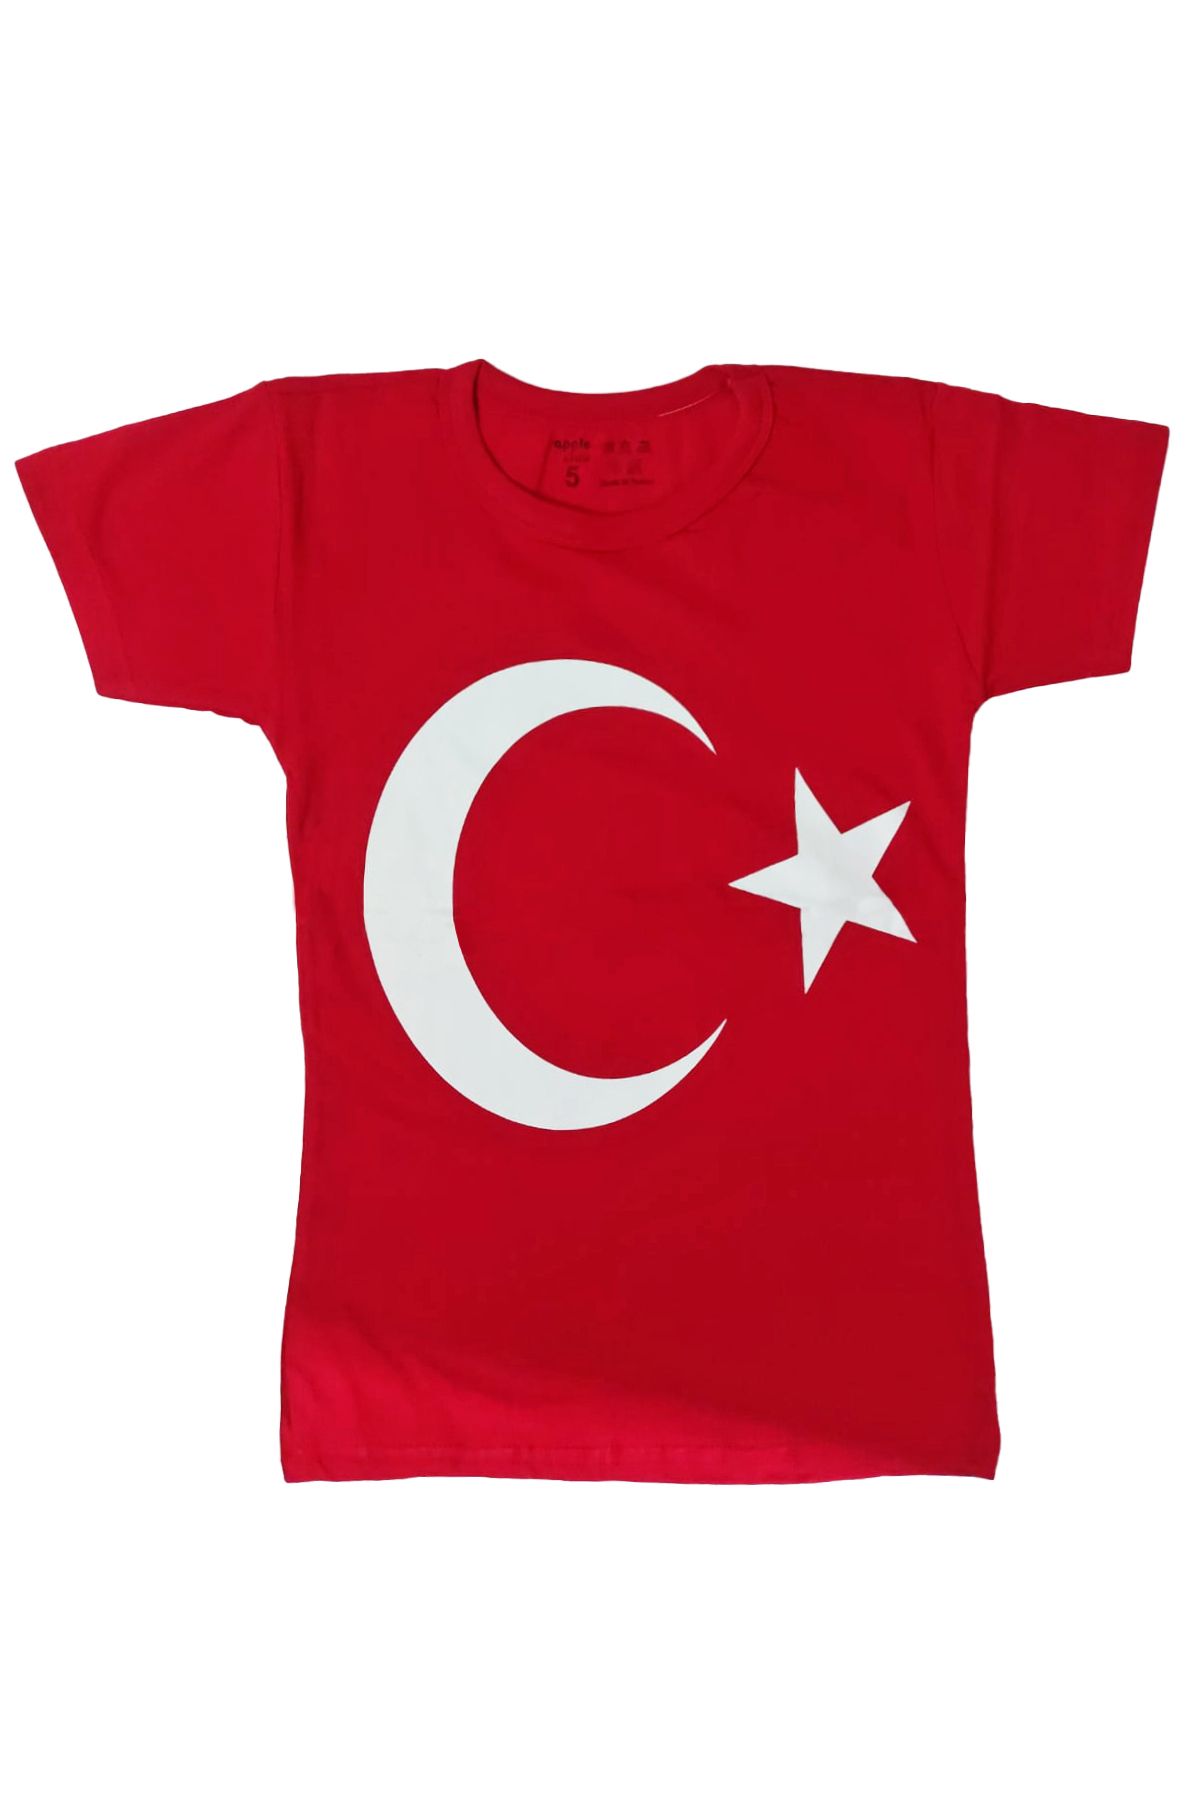 Limmy Türk Bayraklı Tişört Pamuklu Kırmızı Ay Yıldız Çocuk Tshirt- 6 Yaş